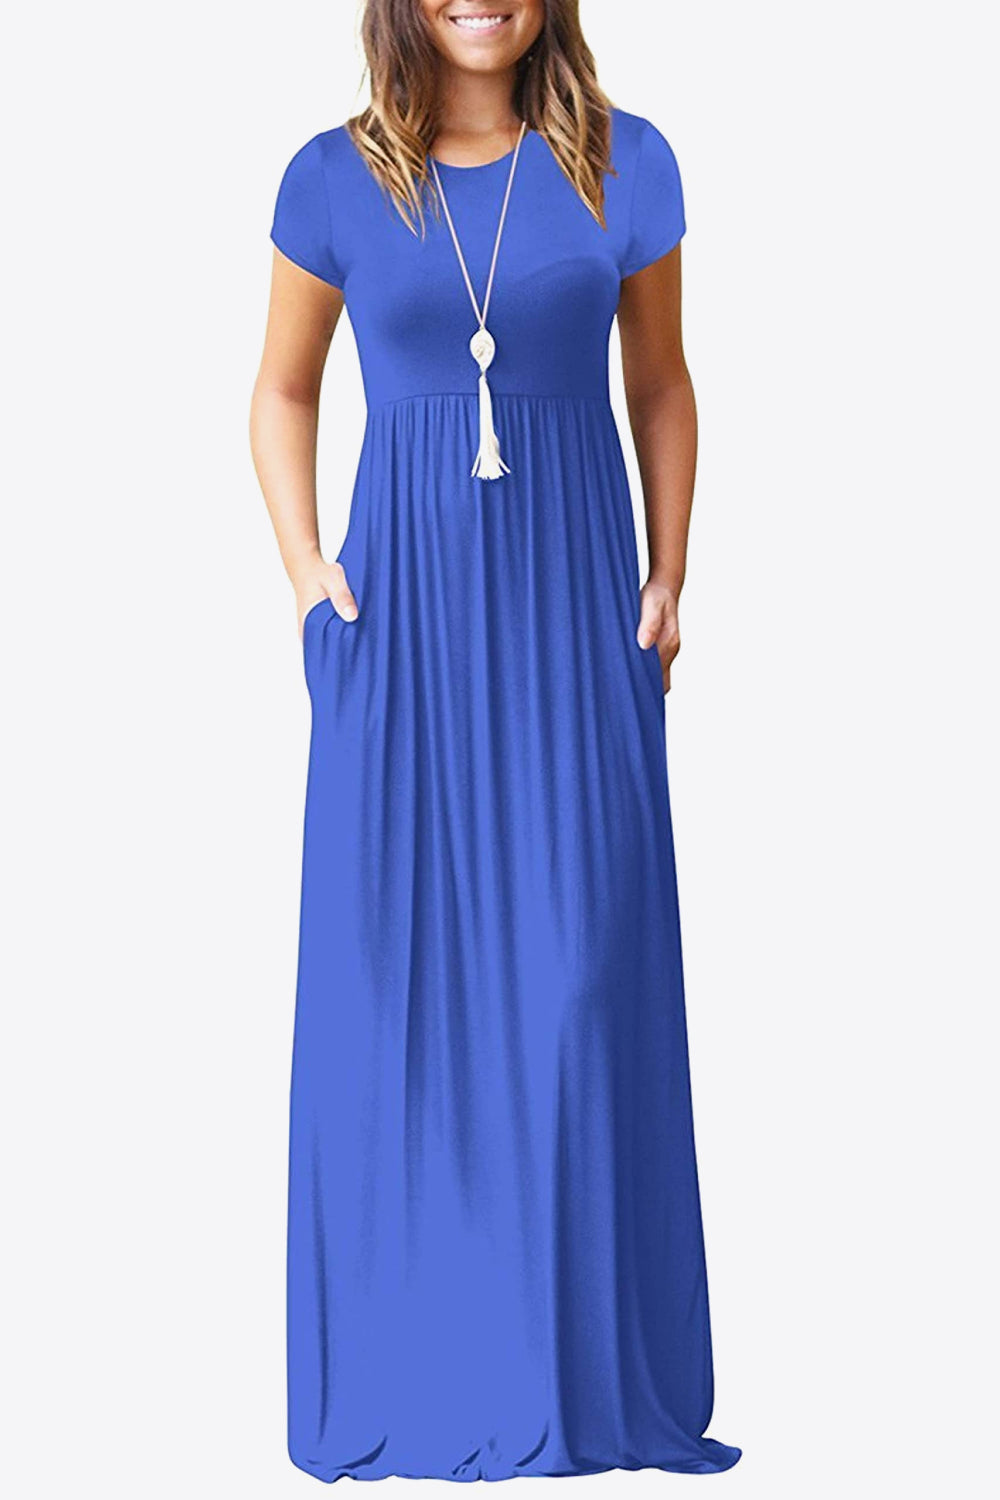 Full Size Short Sleeve Round Neck Dress with Pockets